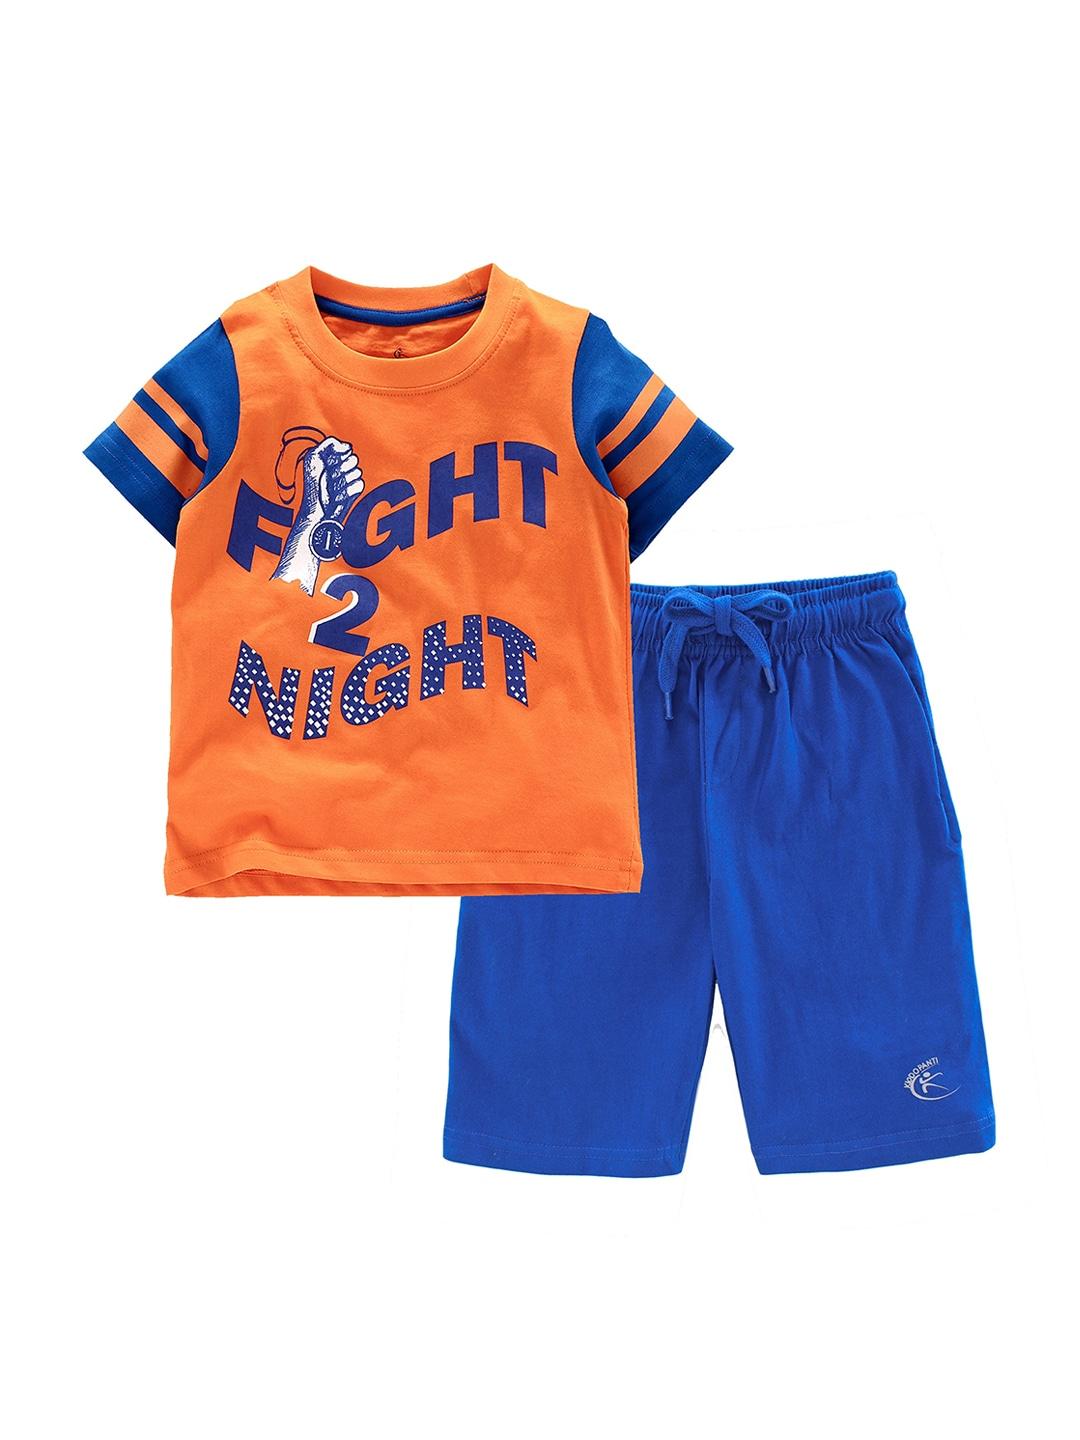 KiddoPanti Boys Orange & Blue Printed T-shirt with Shorts